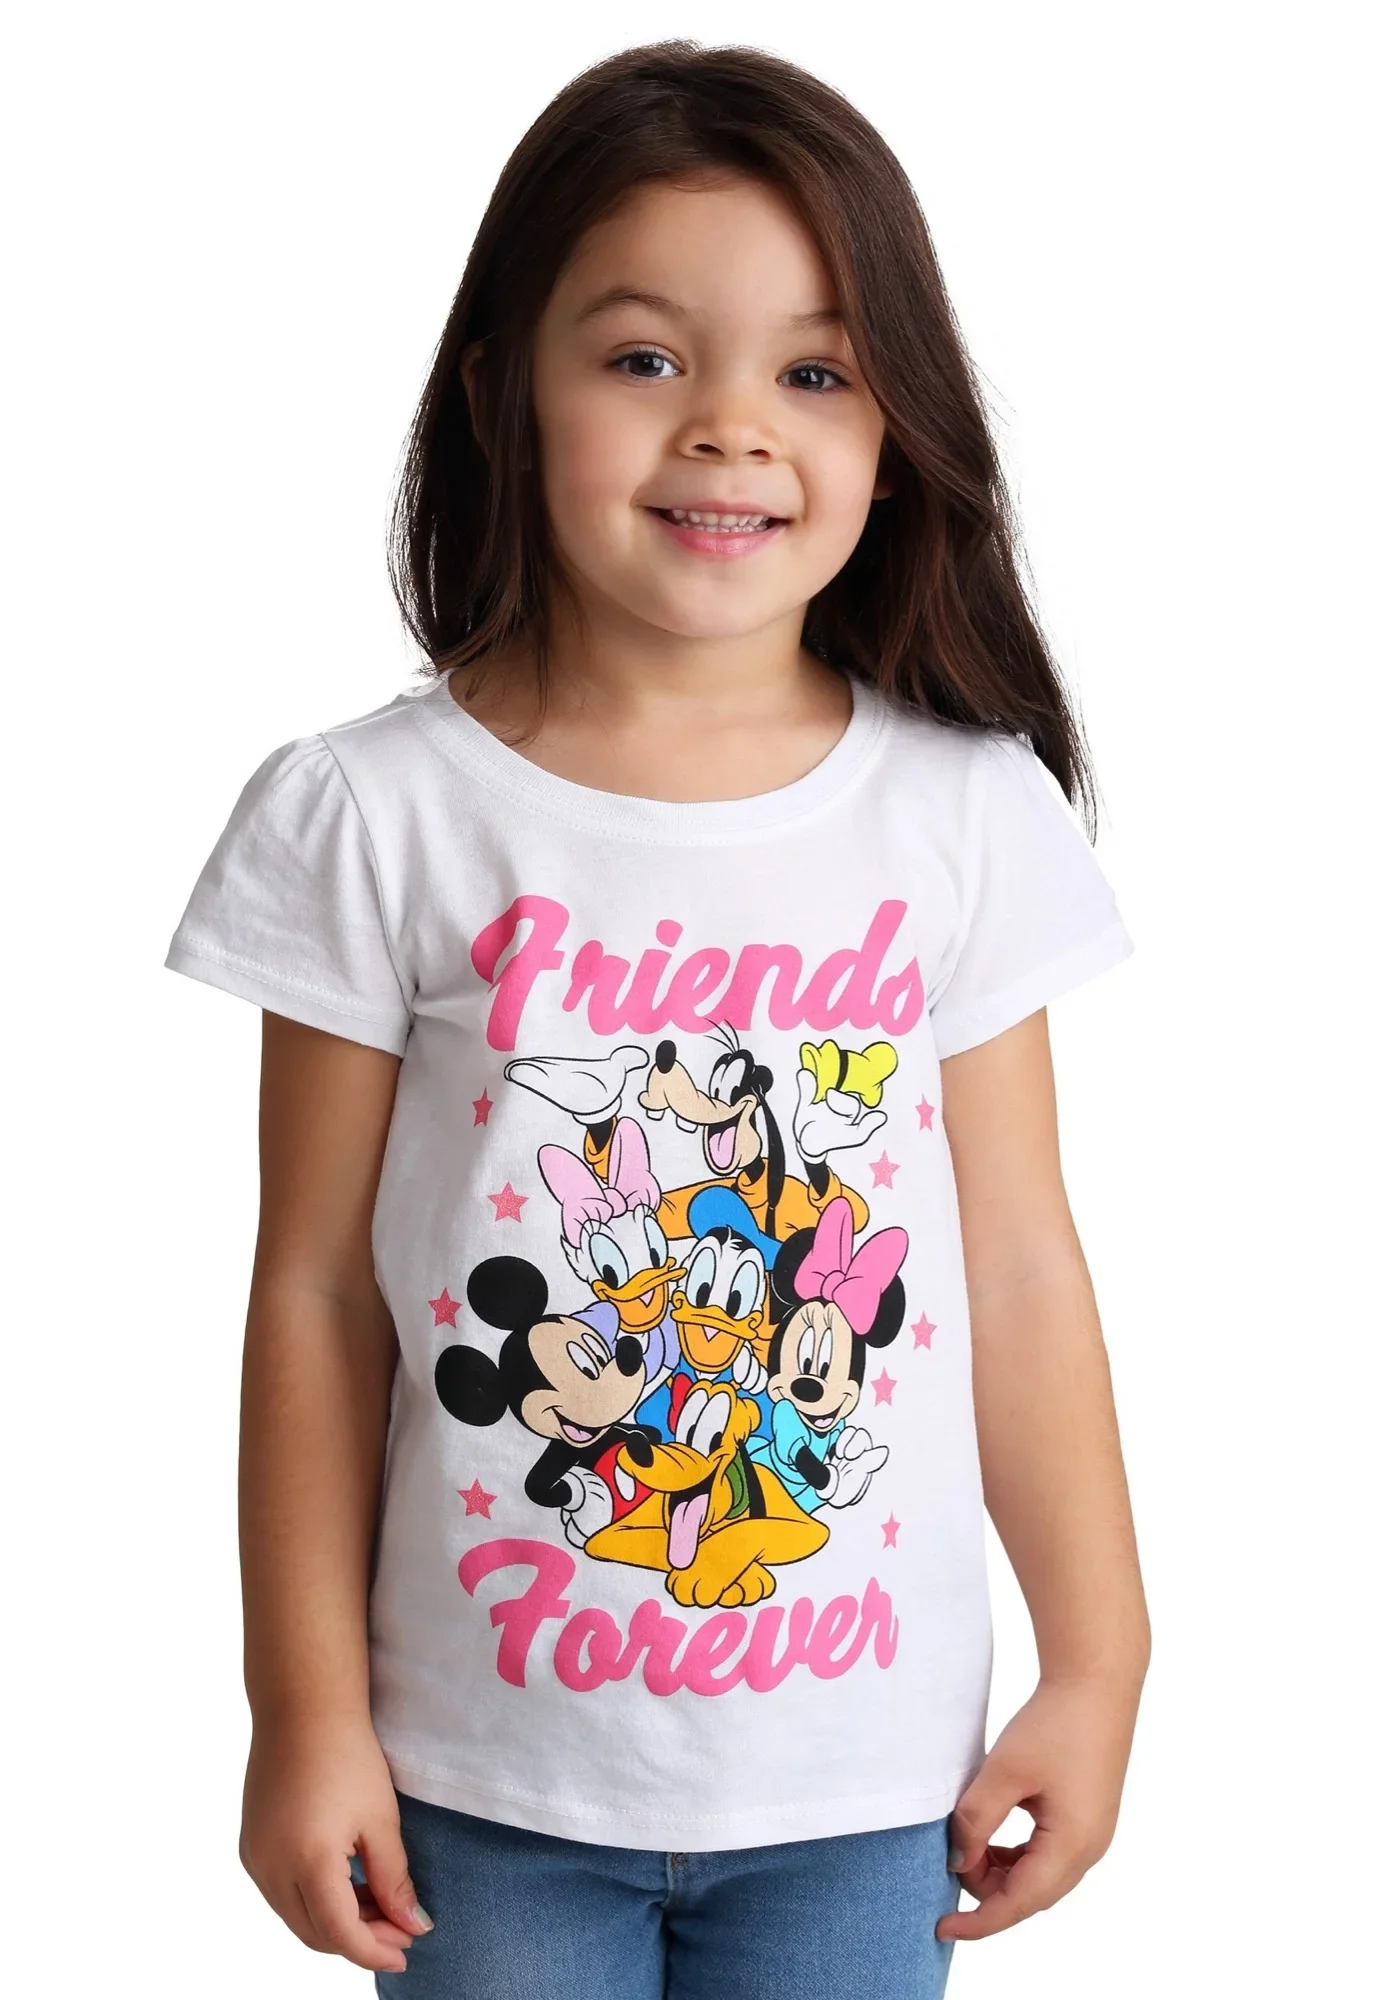 T-shirt Kids Girl (2y-8y) Cartoon Printed Baju Budak Perempuan Cute Kids Tshirt Cotton